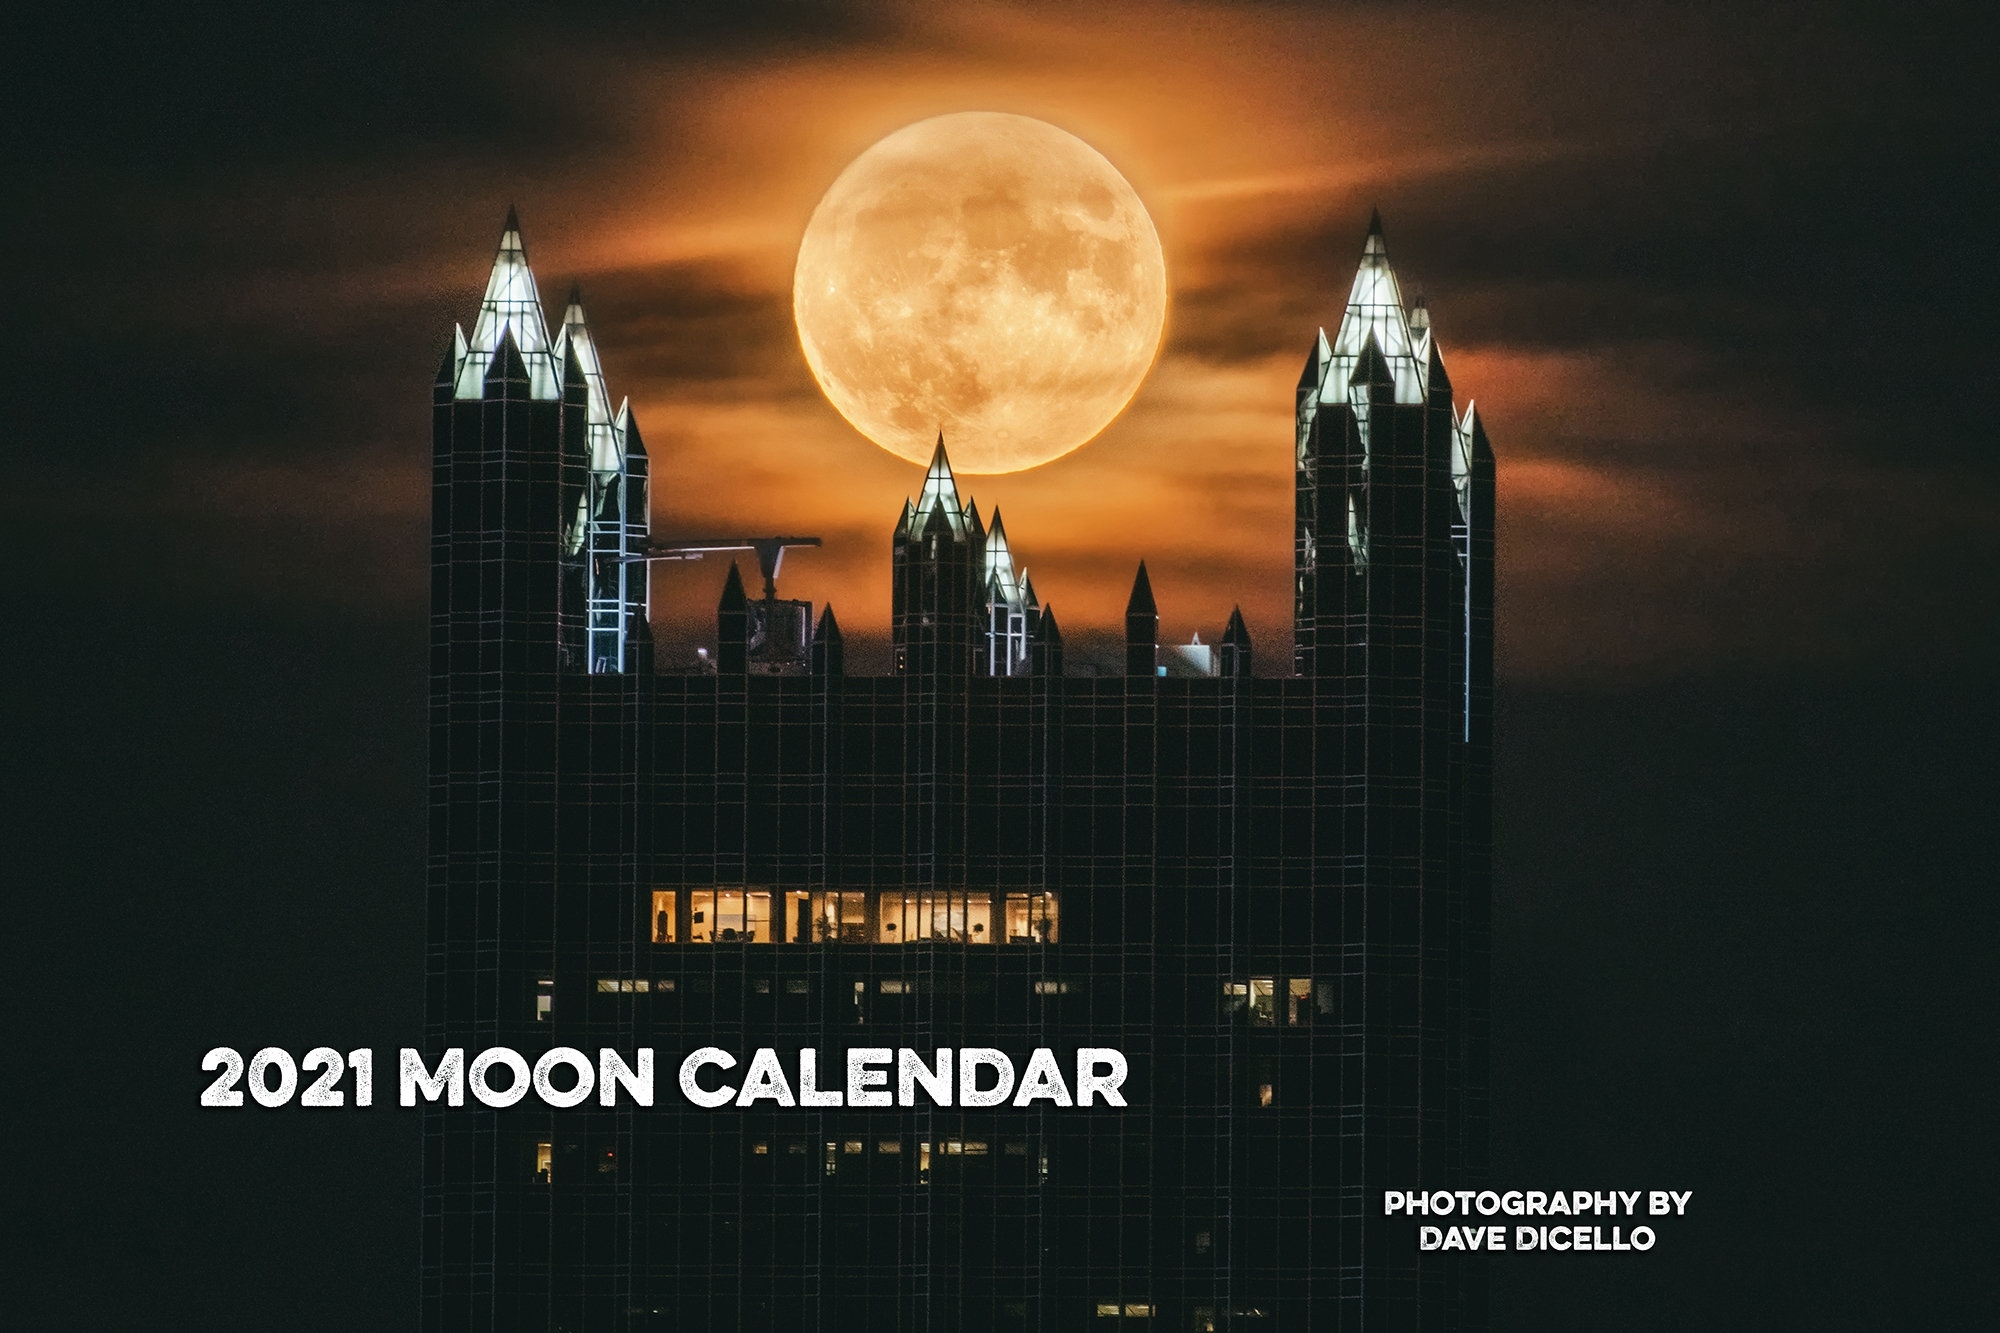 2021 Moon Calendar August 2021 Full Moon Calendar